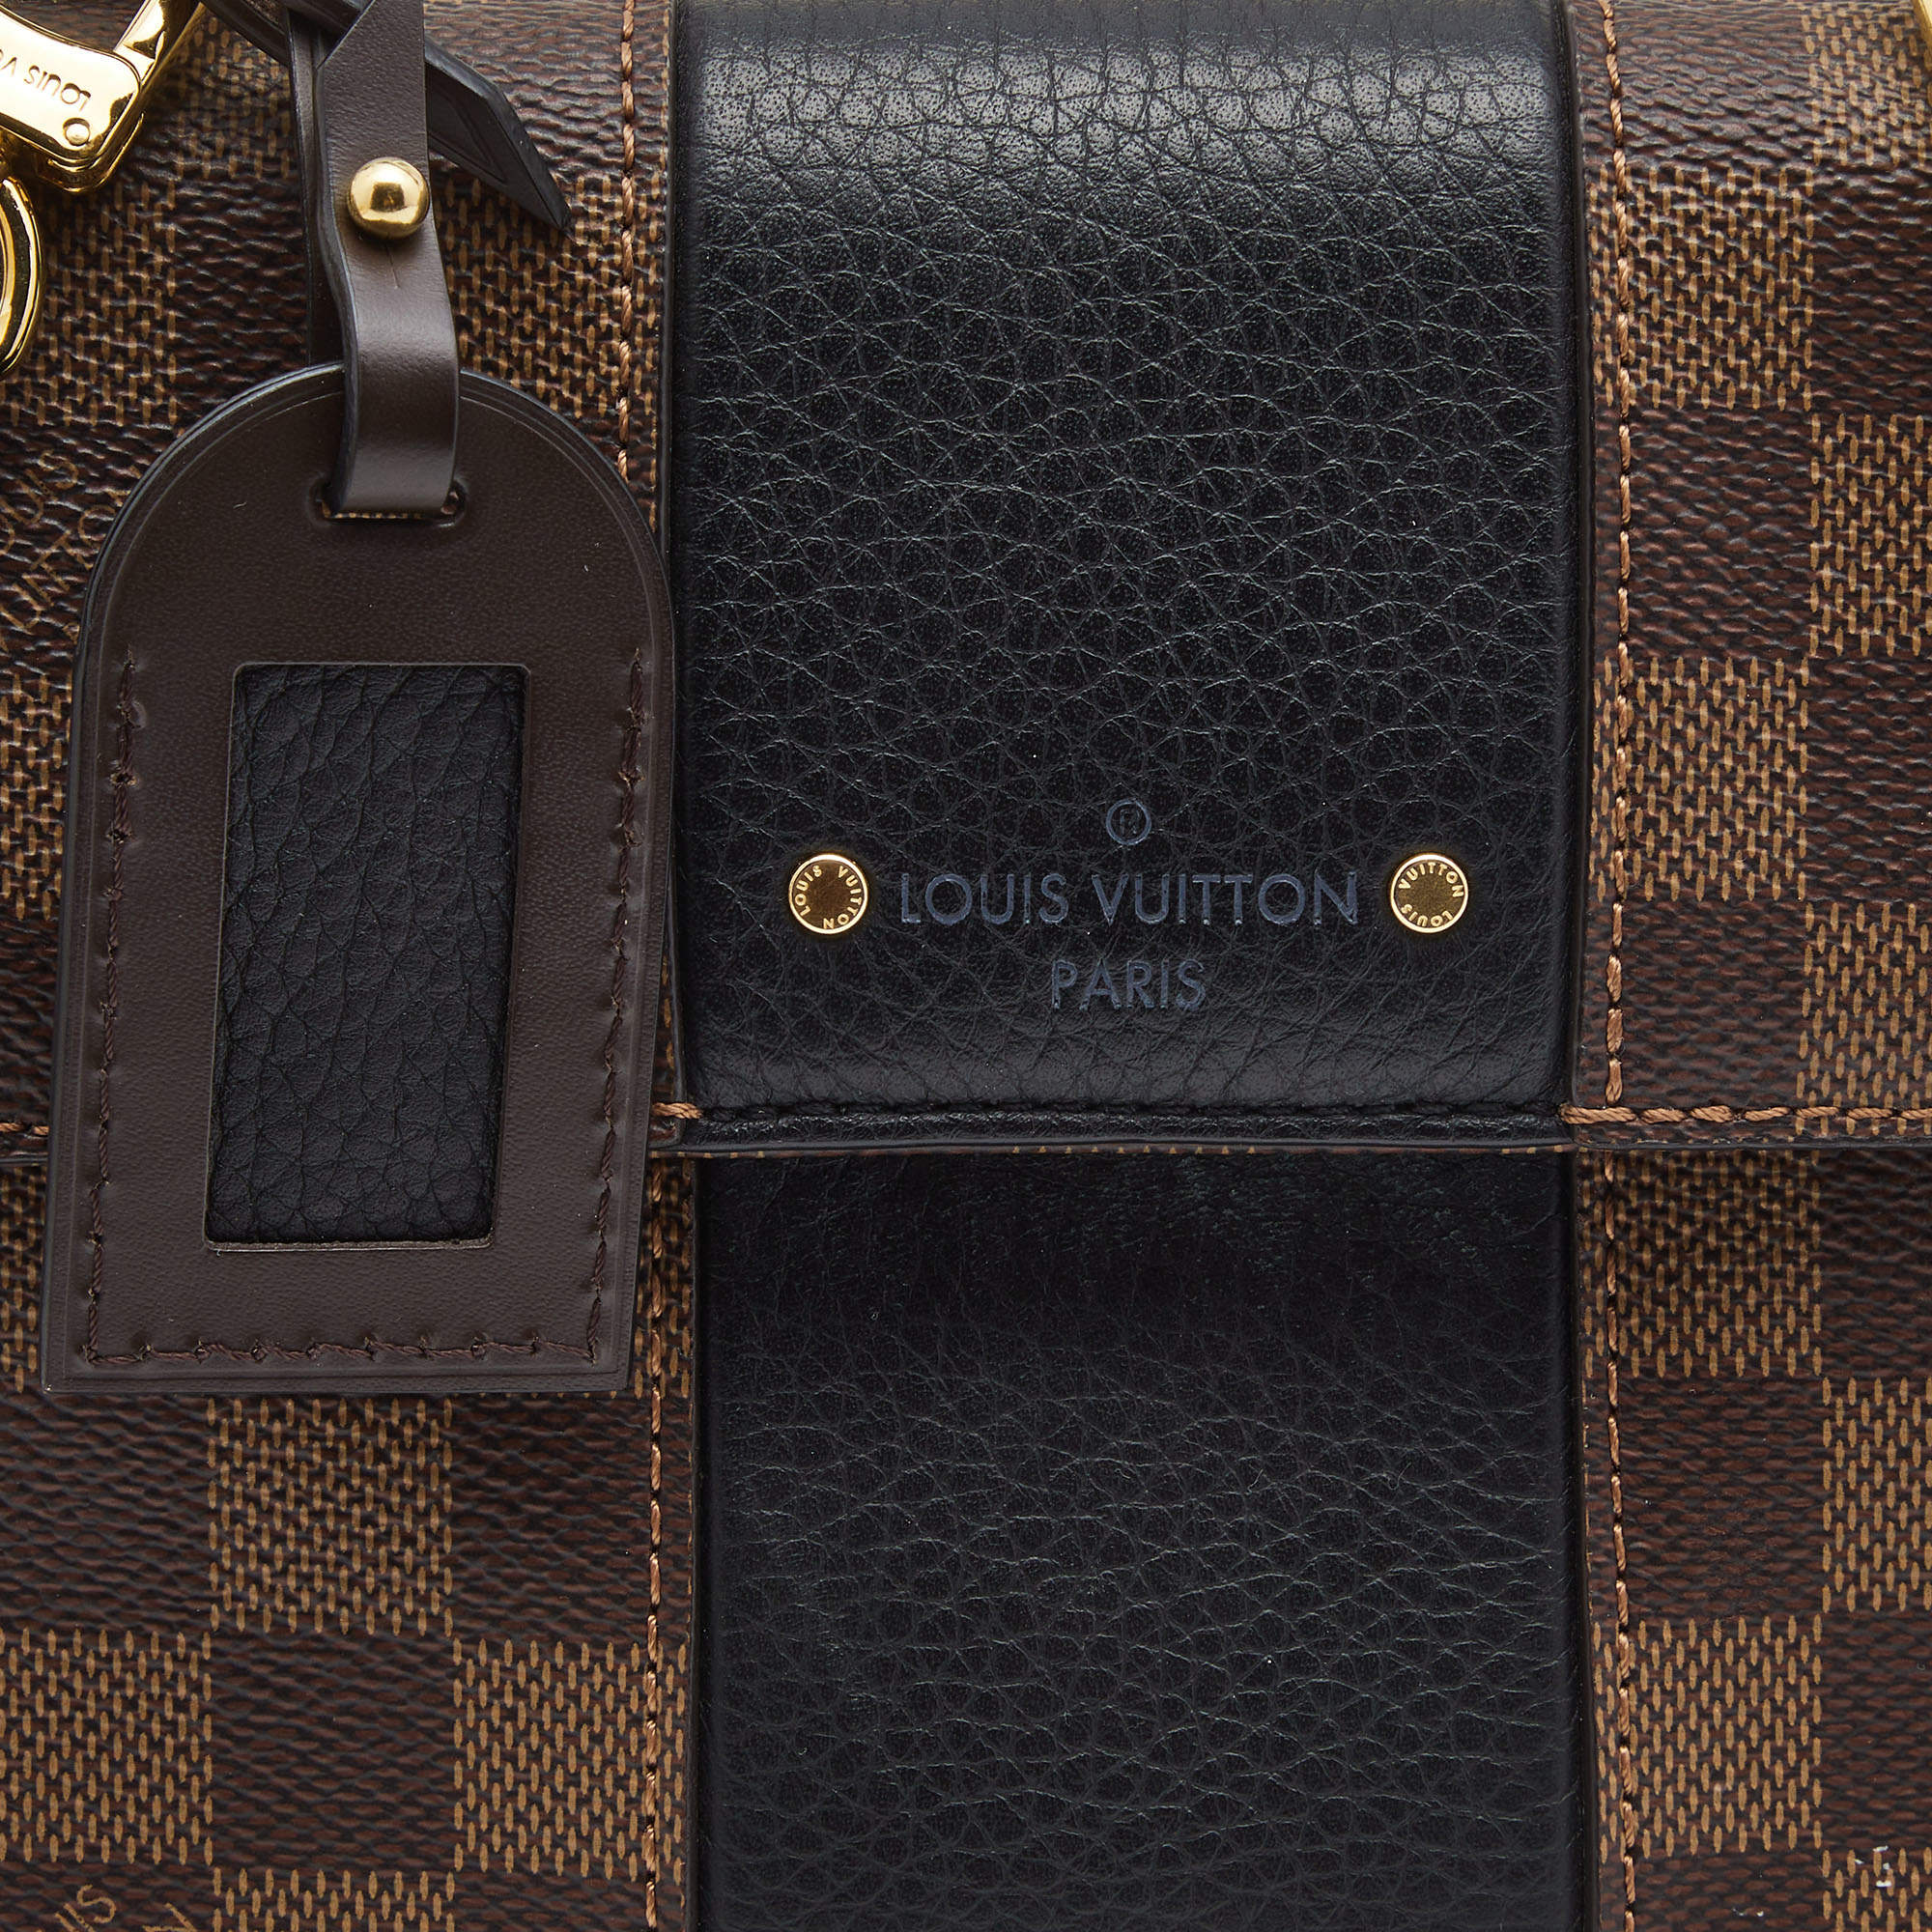 Louis Vuitton Bond Street Bb Sized Bag